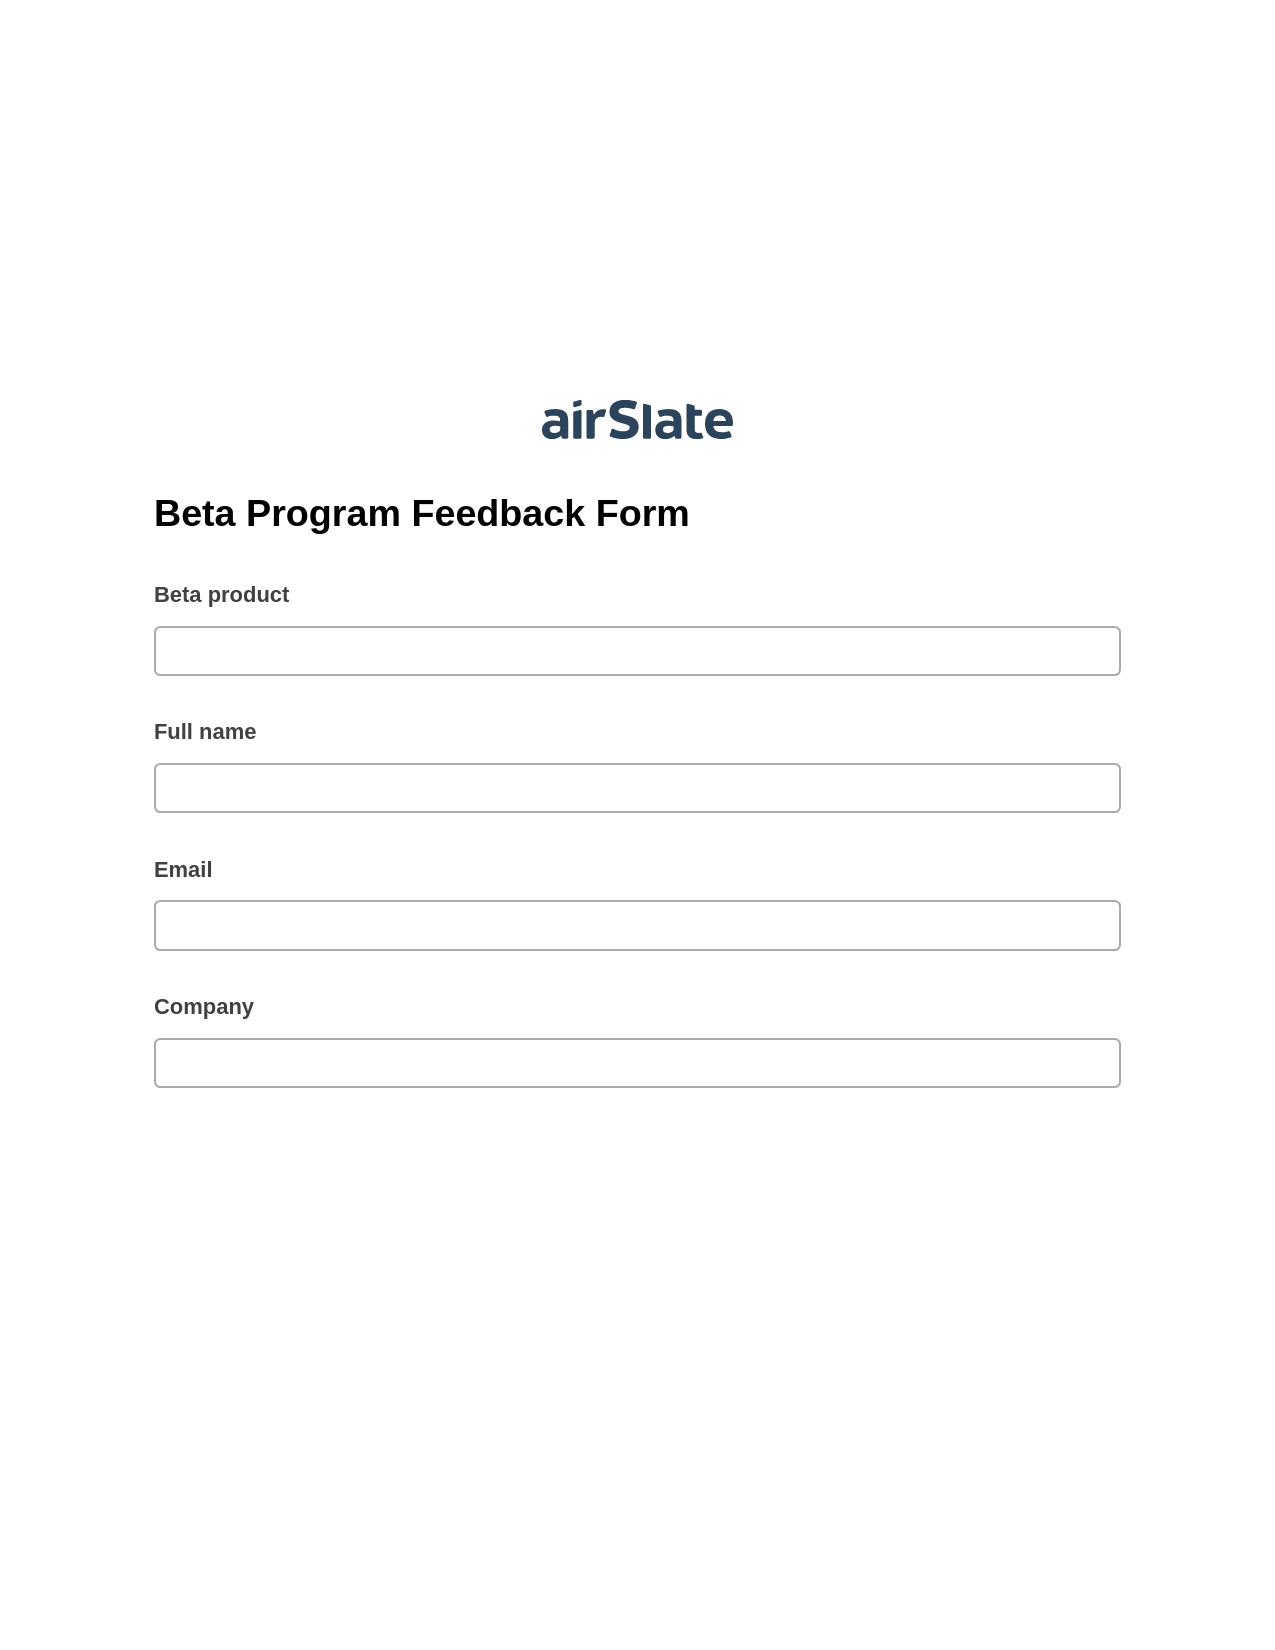 Multirole Beta Program Feedback Form Pre-fill Slate from MS Dynamics 365 Records Bot, Send a Slate to Salesforce Contact Bot, Dropbox Bot